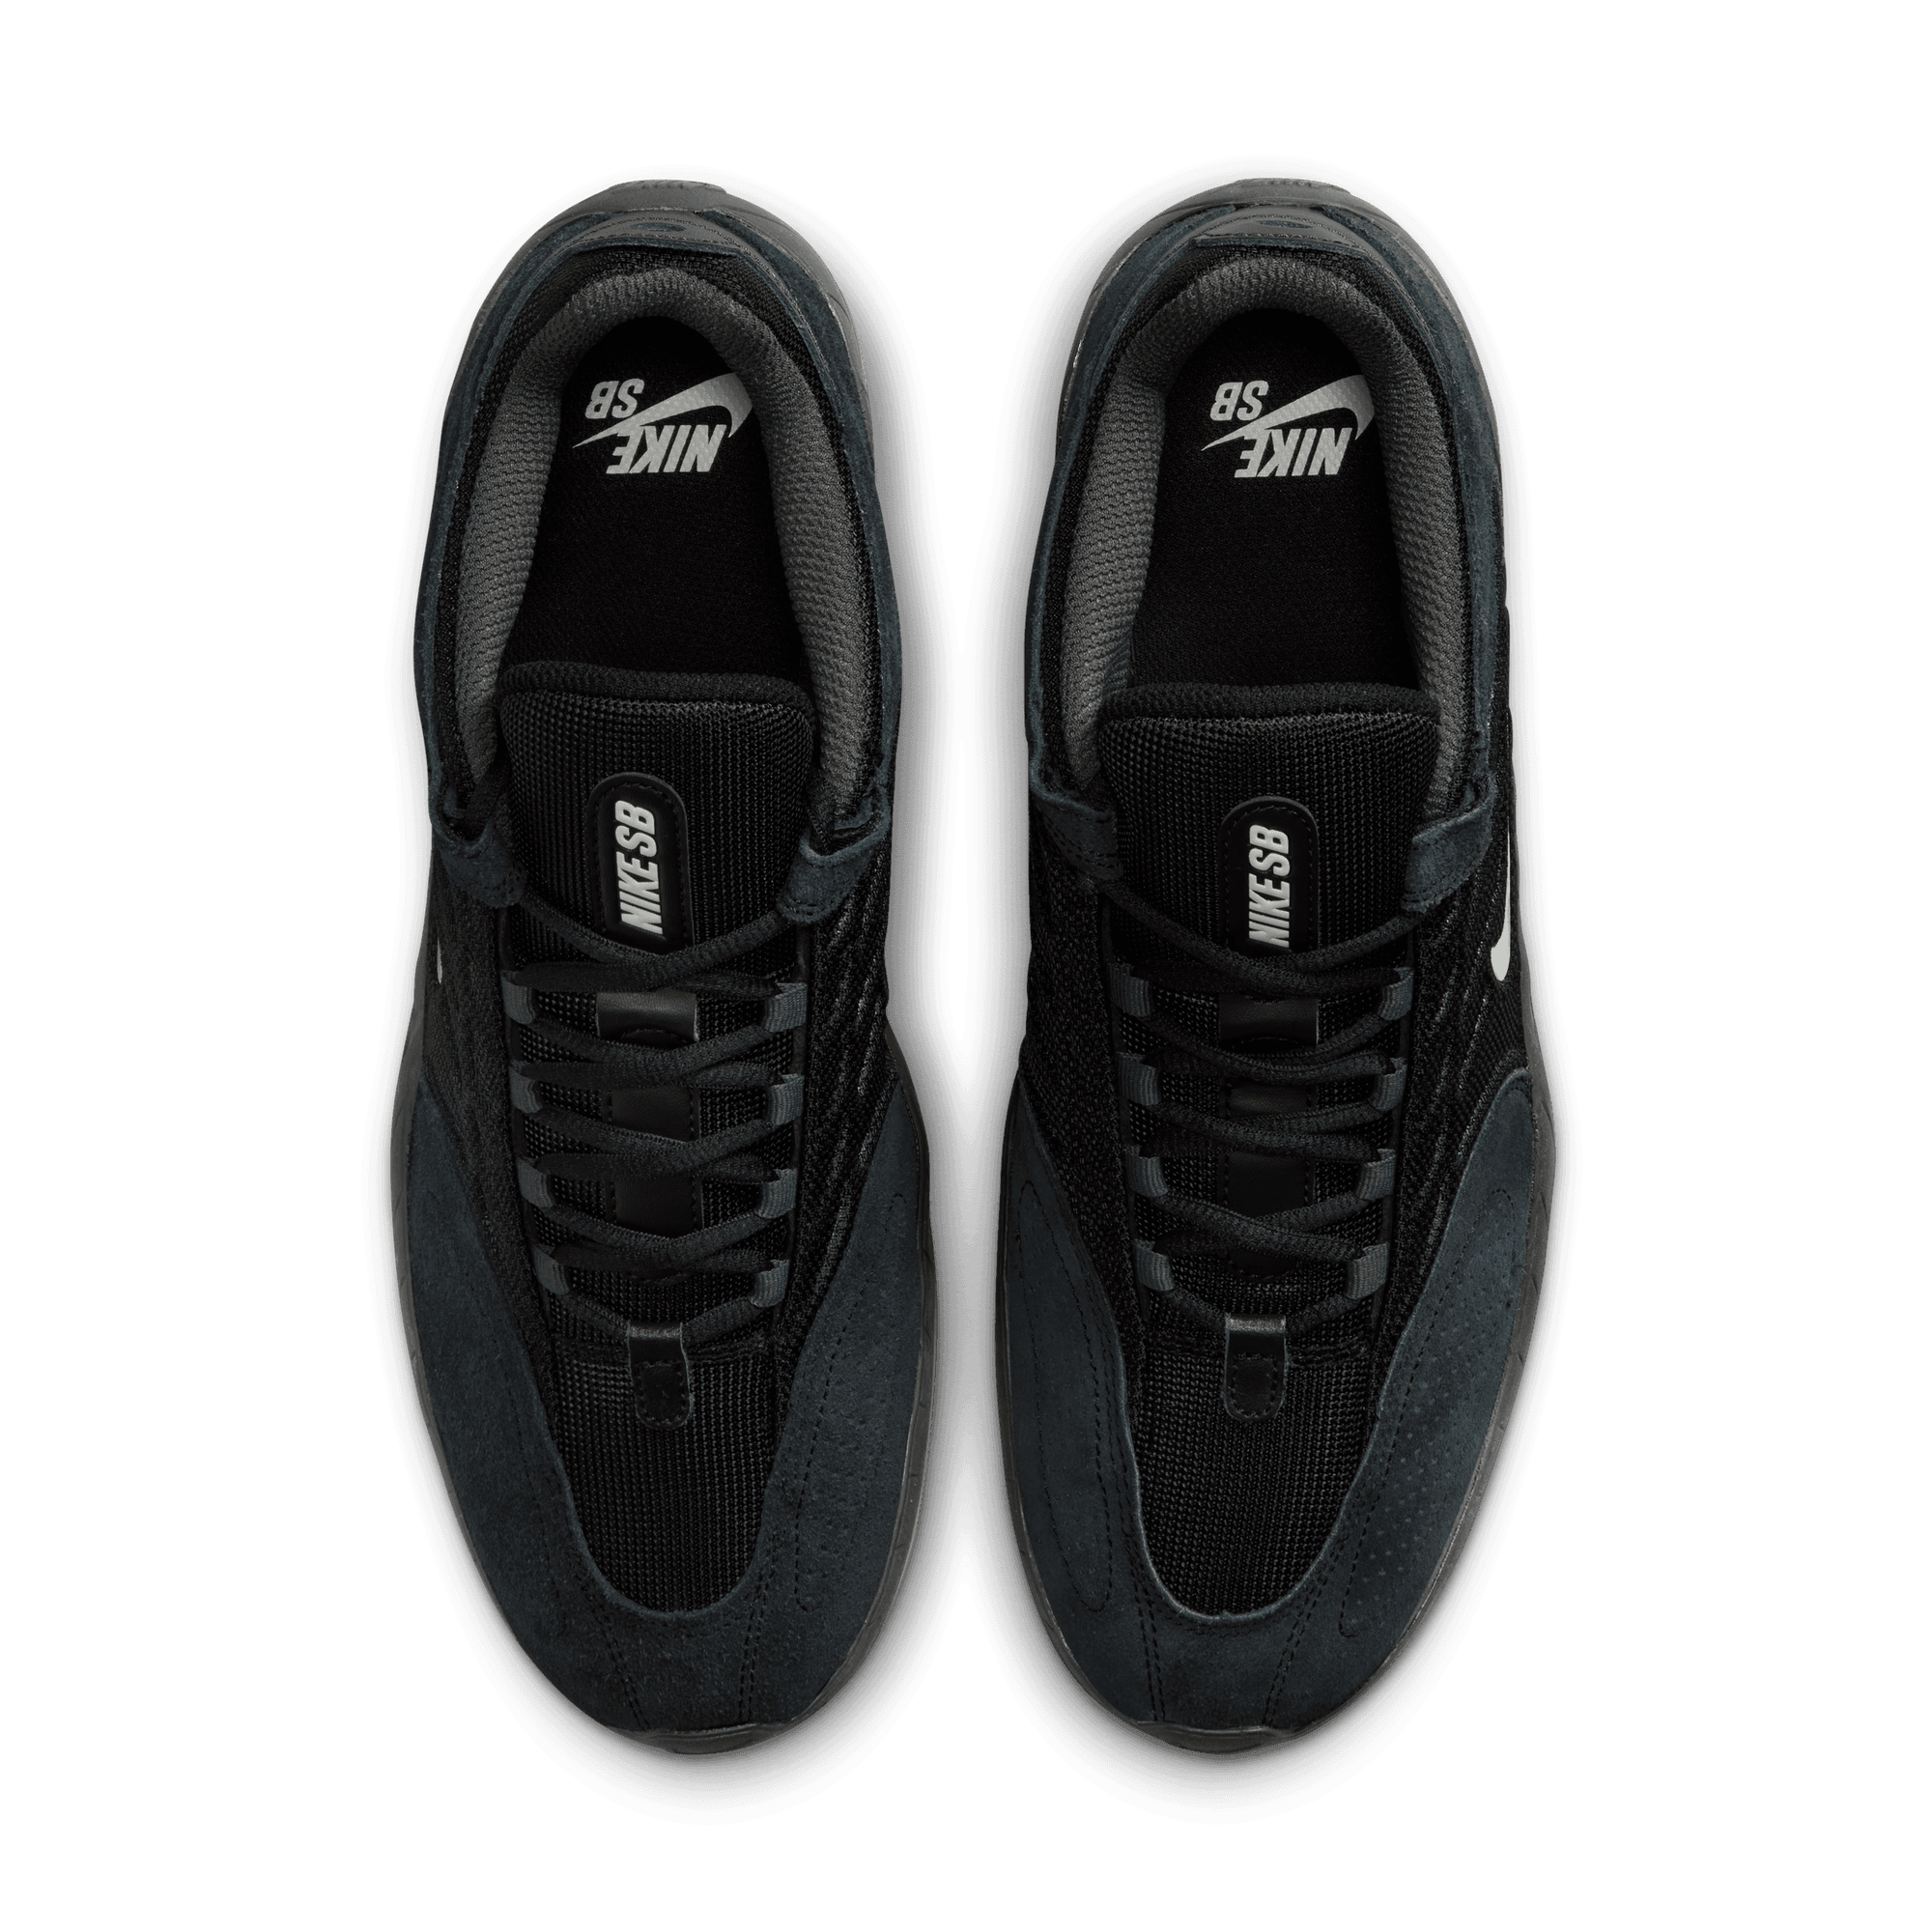 Black/Gum Vertebrae Nike SB Skate Shoe Top